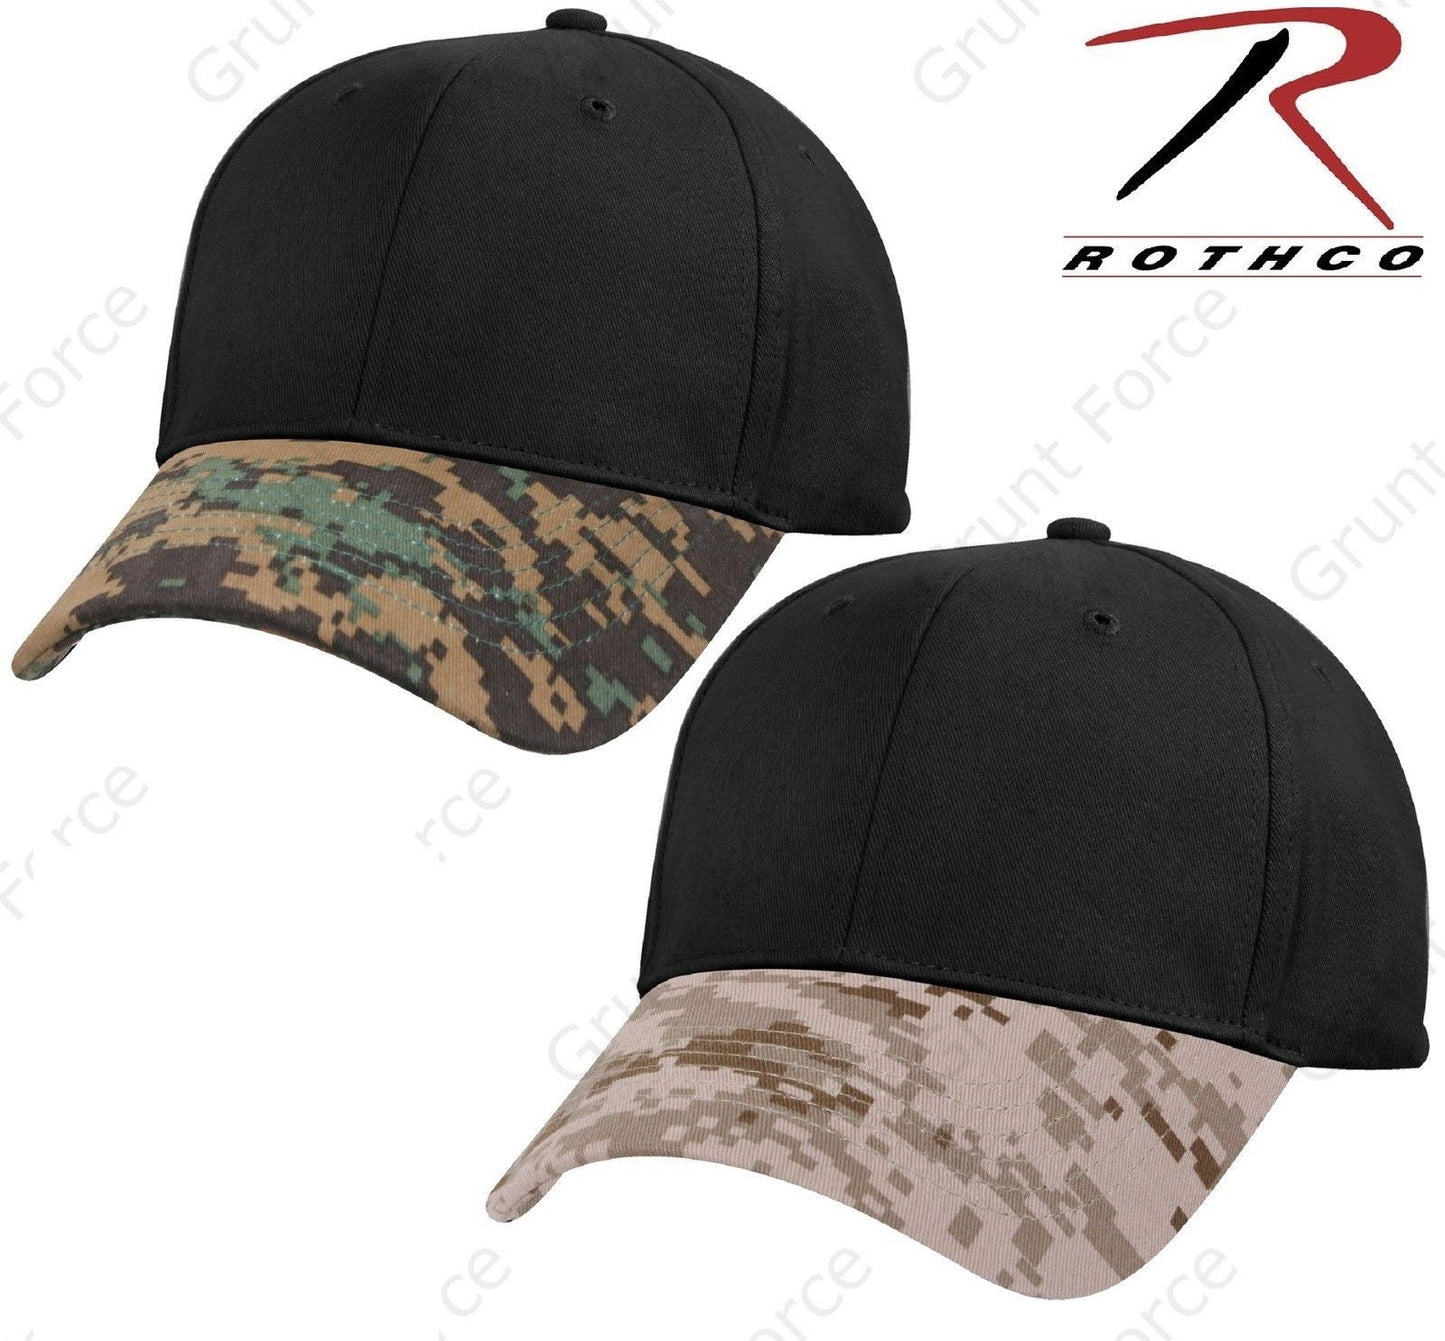 Digital Camouflage Two Tone Low Profile Baseball Cap - Rothco Digi Camo Brim Hat